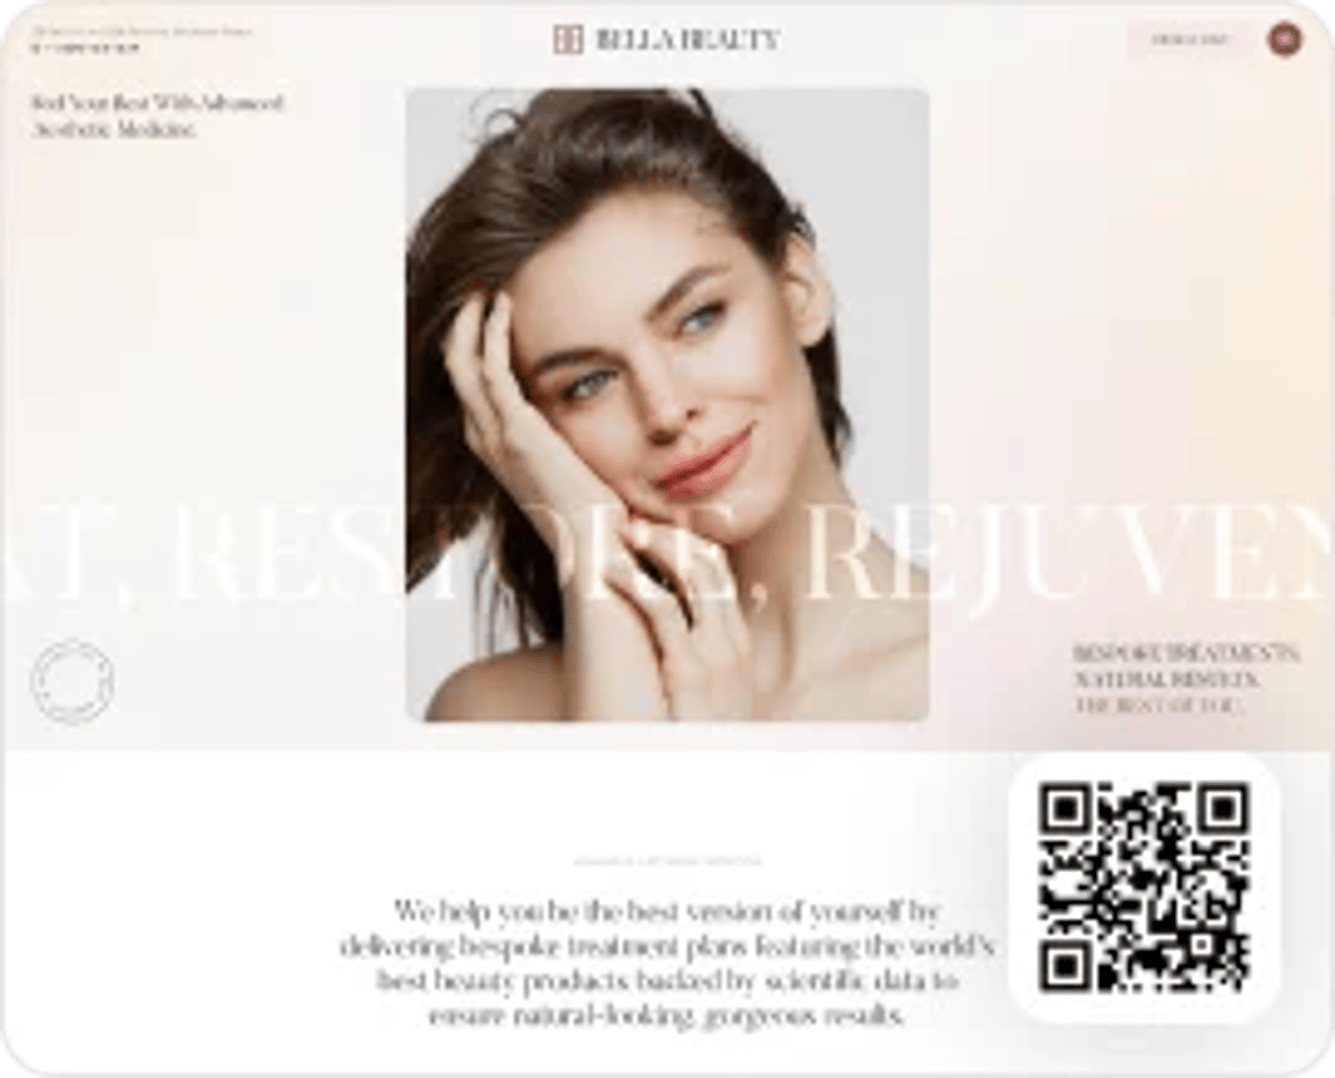 Bella Beauty - Aesthetic Medical Clinic WordPress Theme - Home One | CMSMasters studio